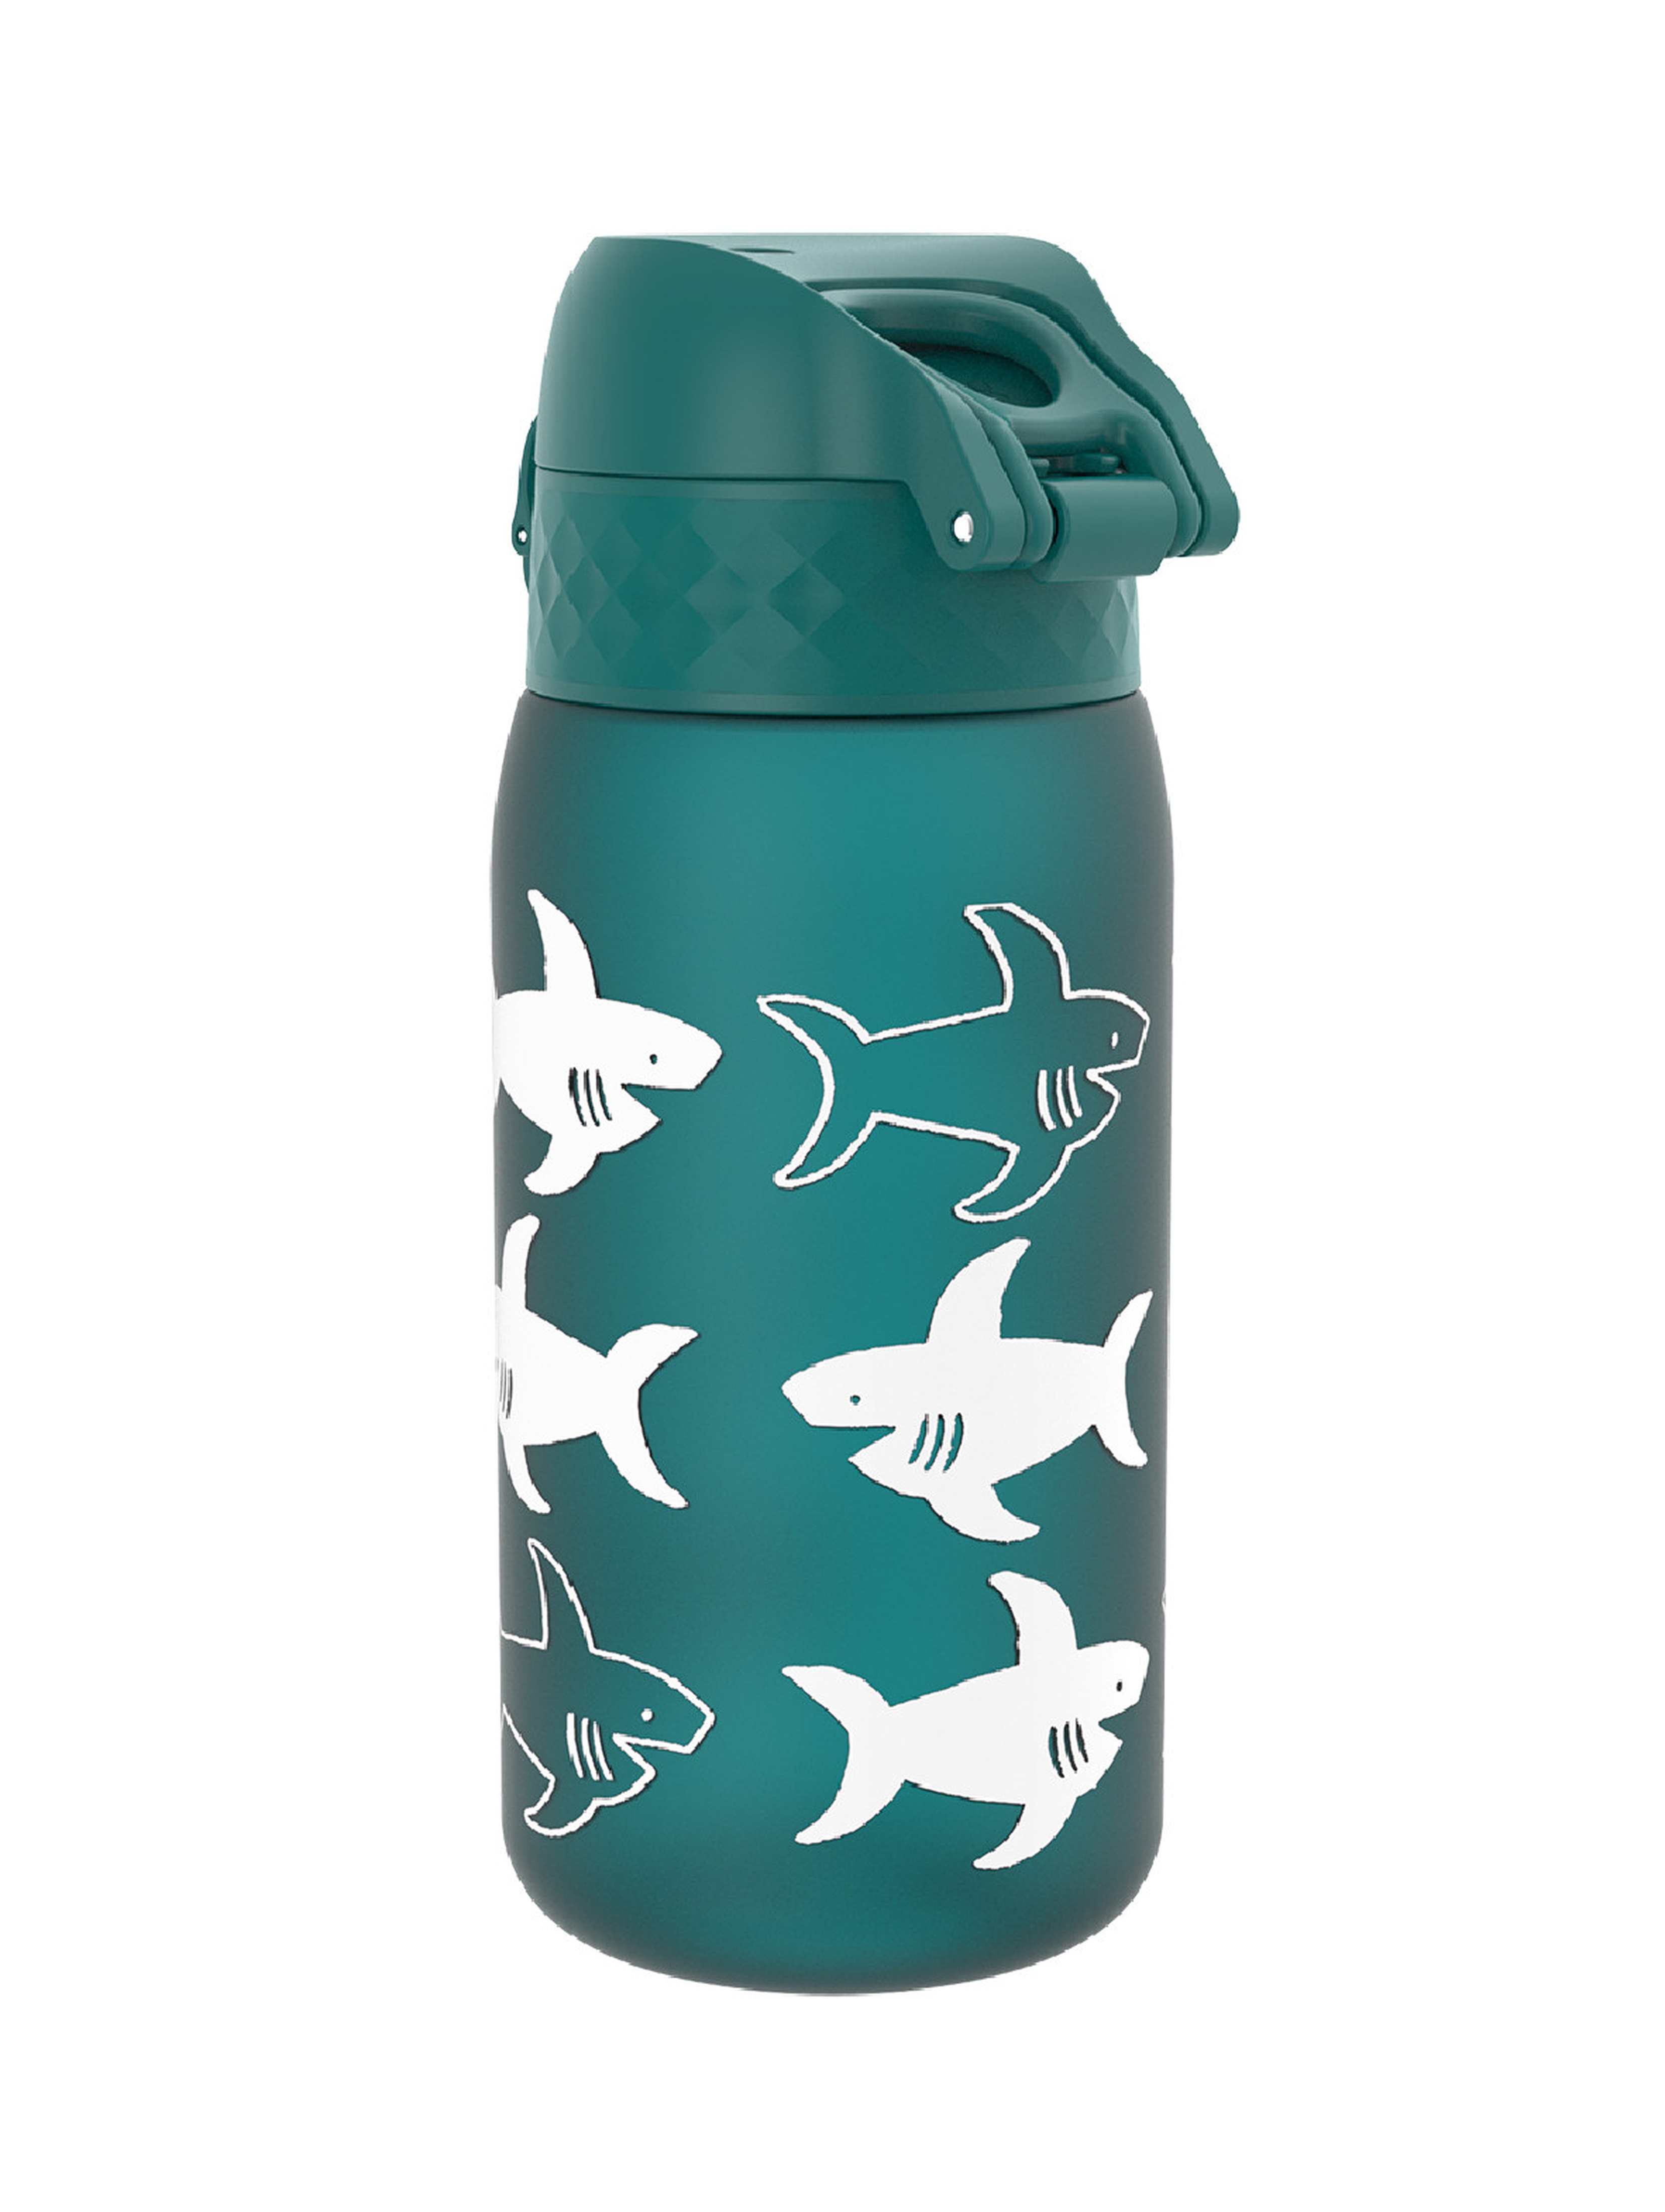 Butelka, bidon na wodę ION8 BPA Free Sharks zielony 400ml